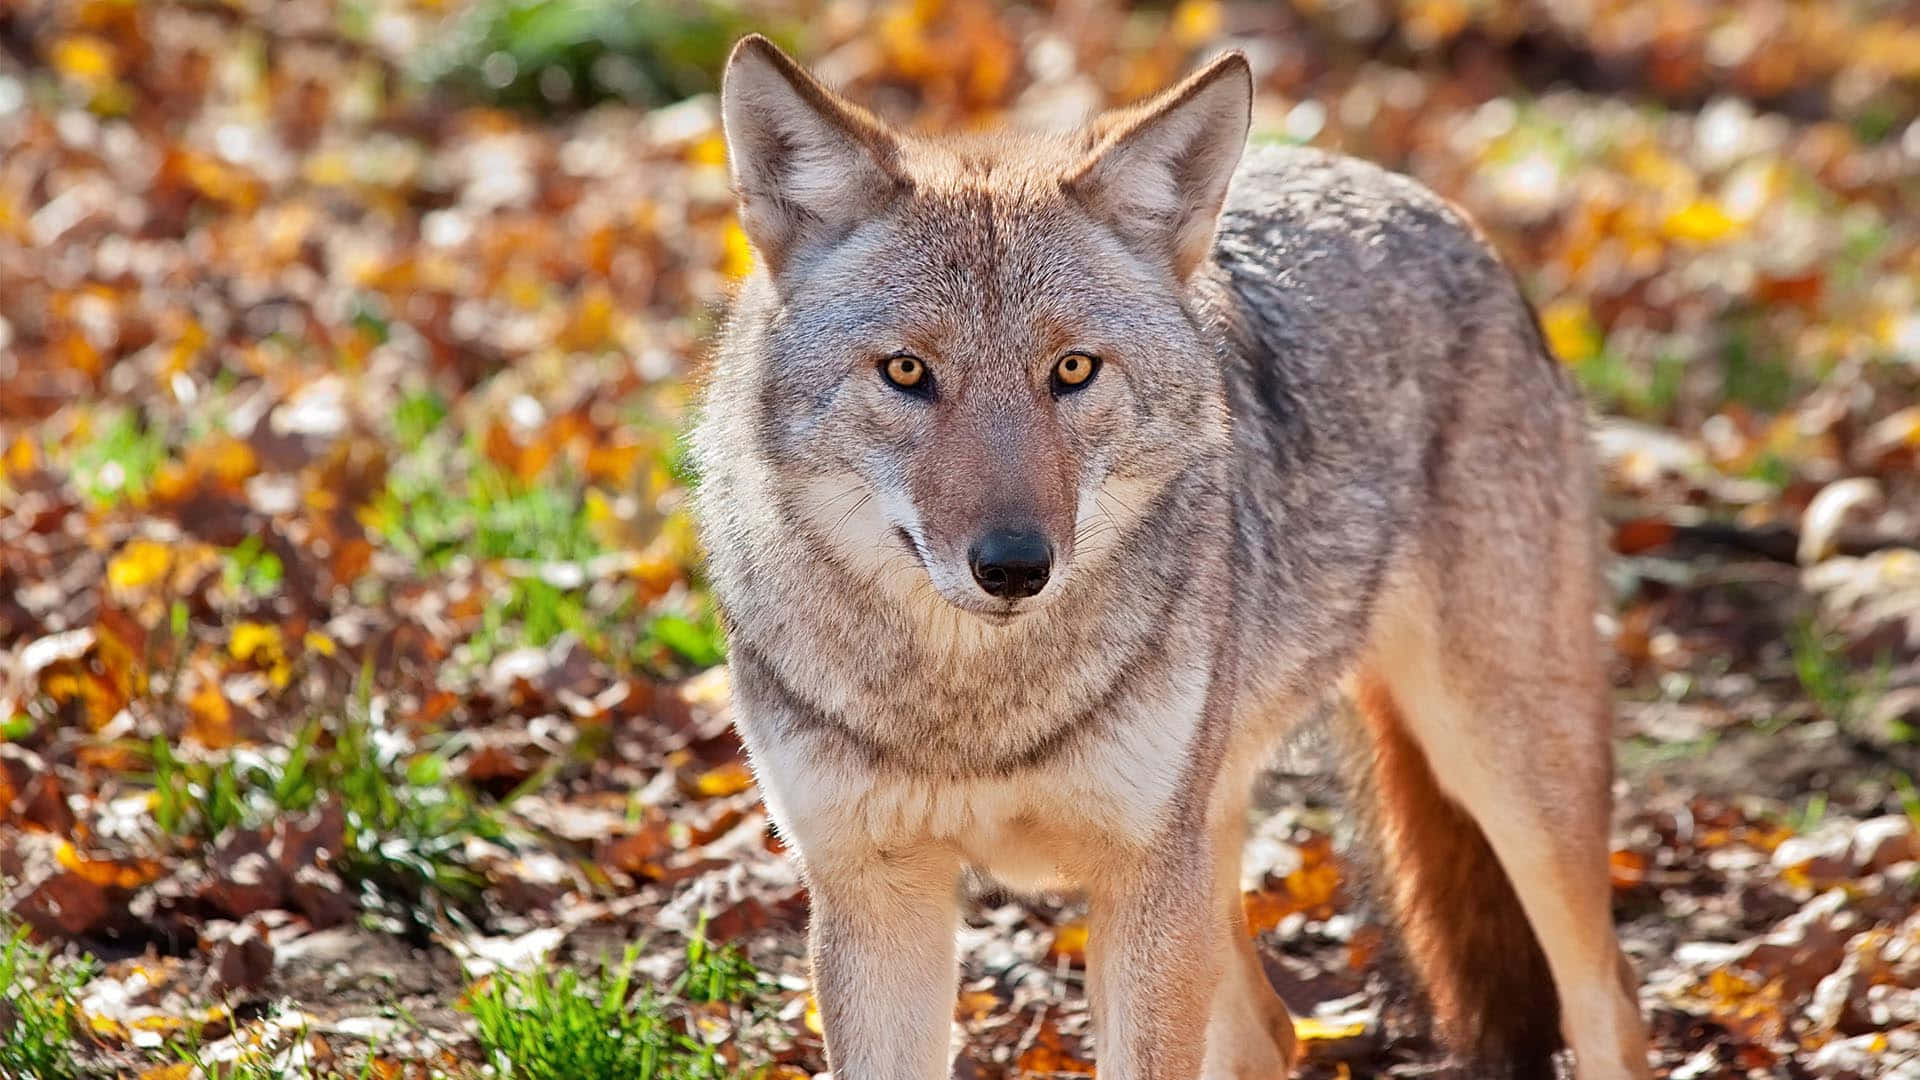 Related Keywords: coyote, predator, nature, wildlife, scavenger, hunting, meadow.